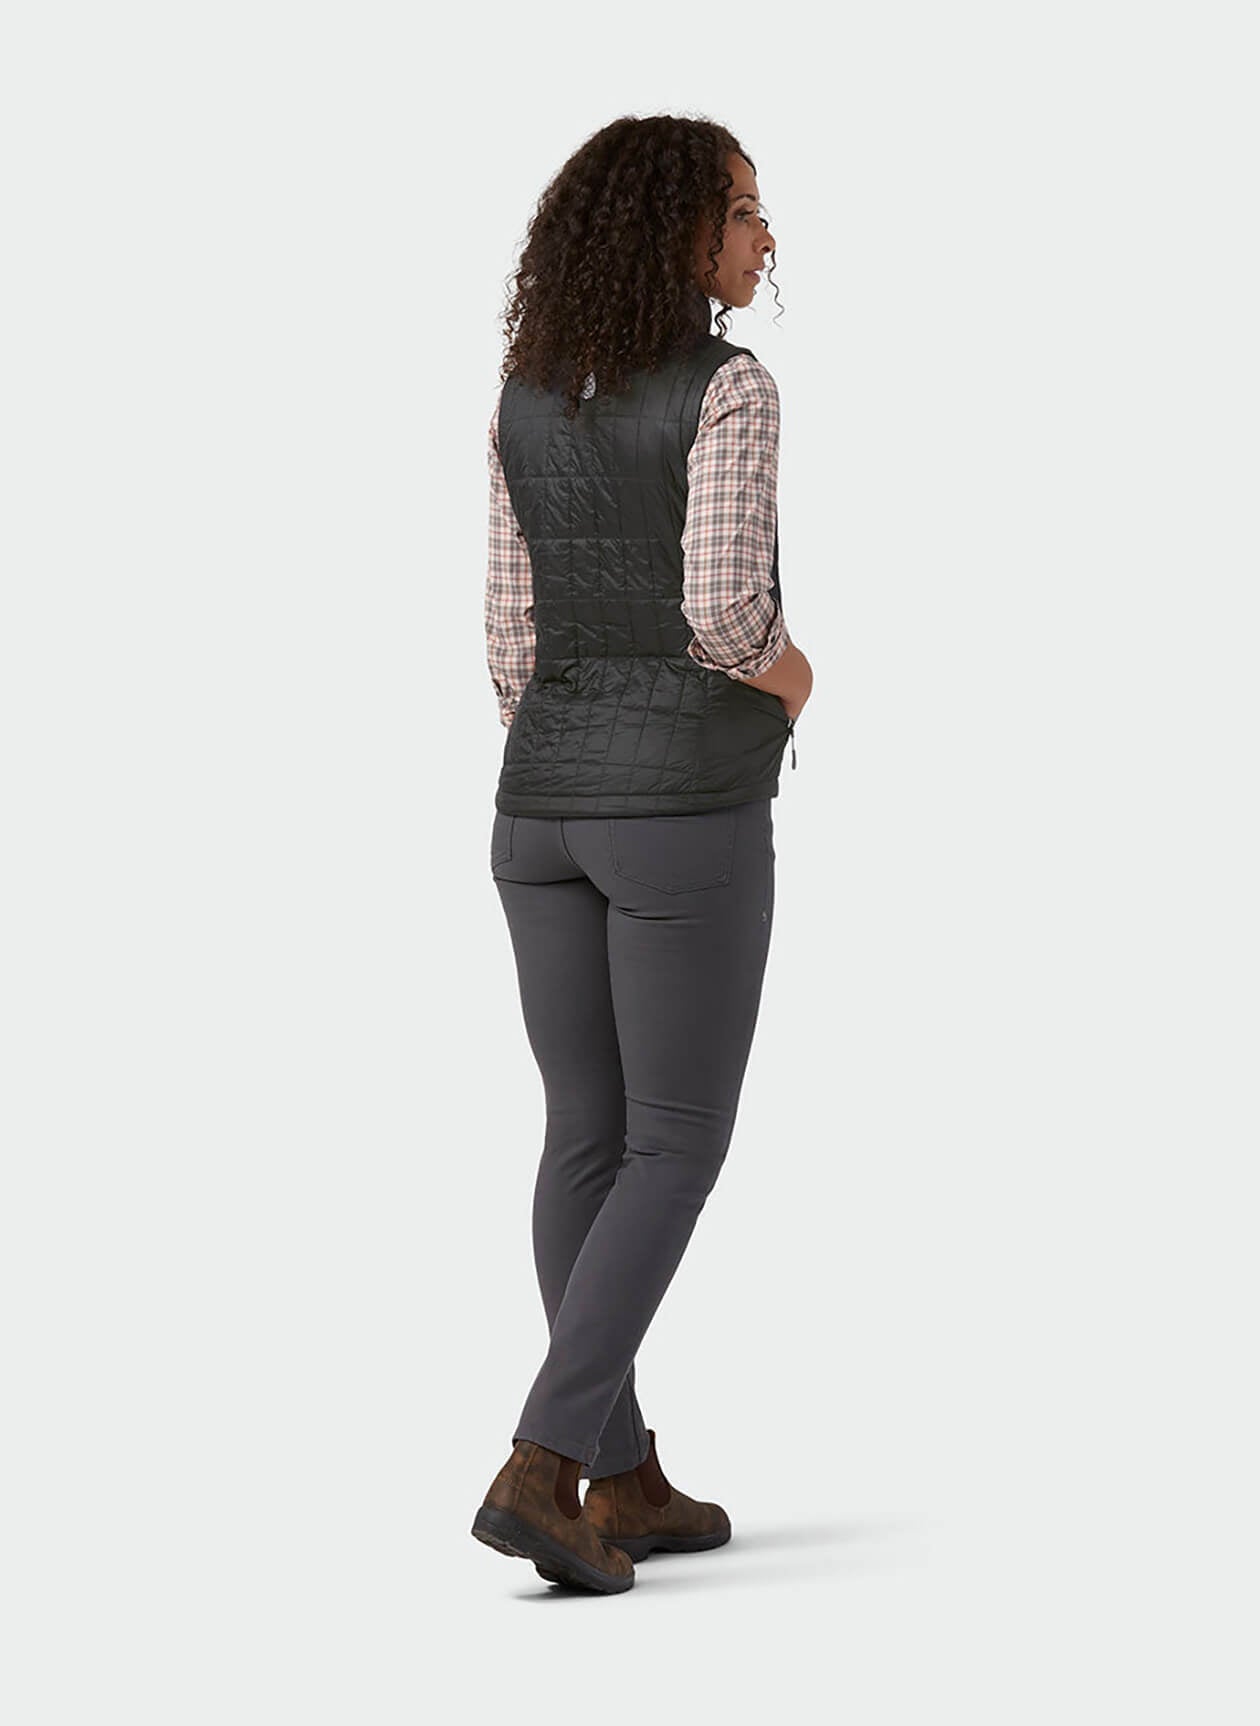 STIO Women's Azura Lightweight Vest, Boundary Black